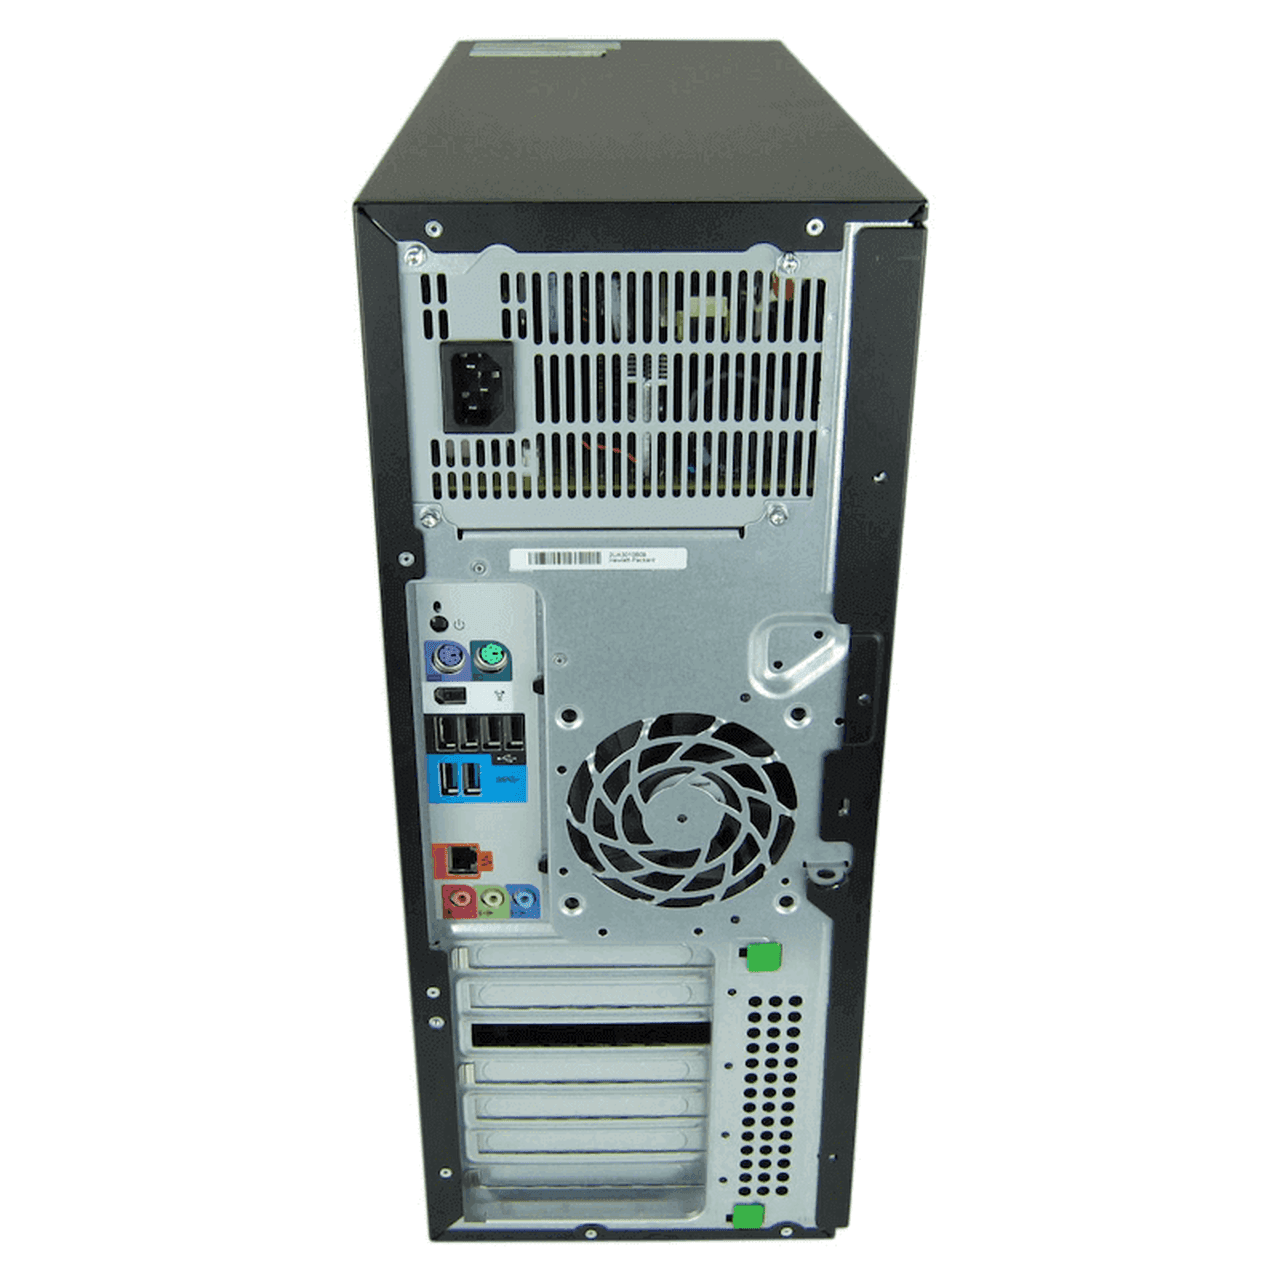 HP Z420 Workstation Tower Deca core Intel Xeon E5-2670 V2 - Rivivonet